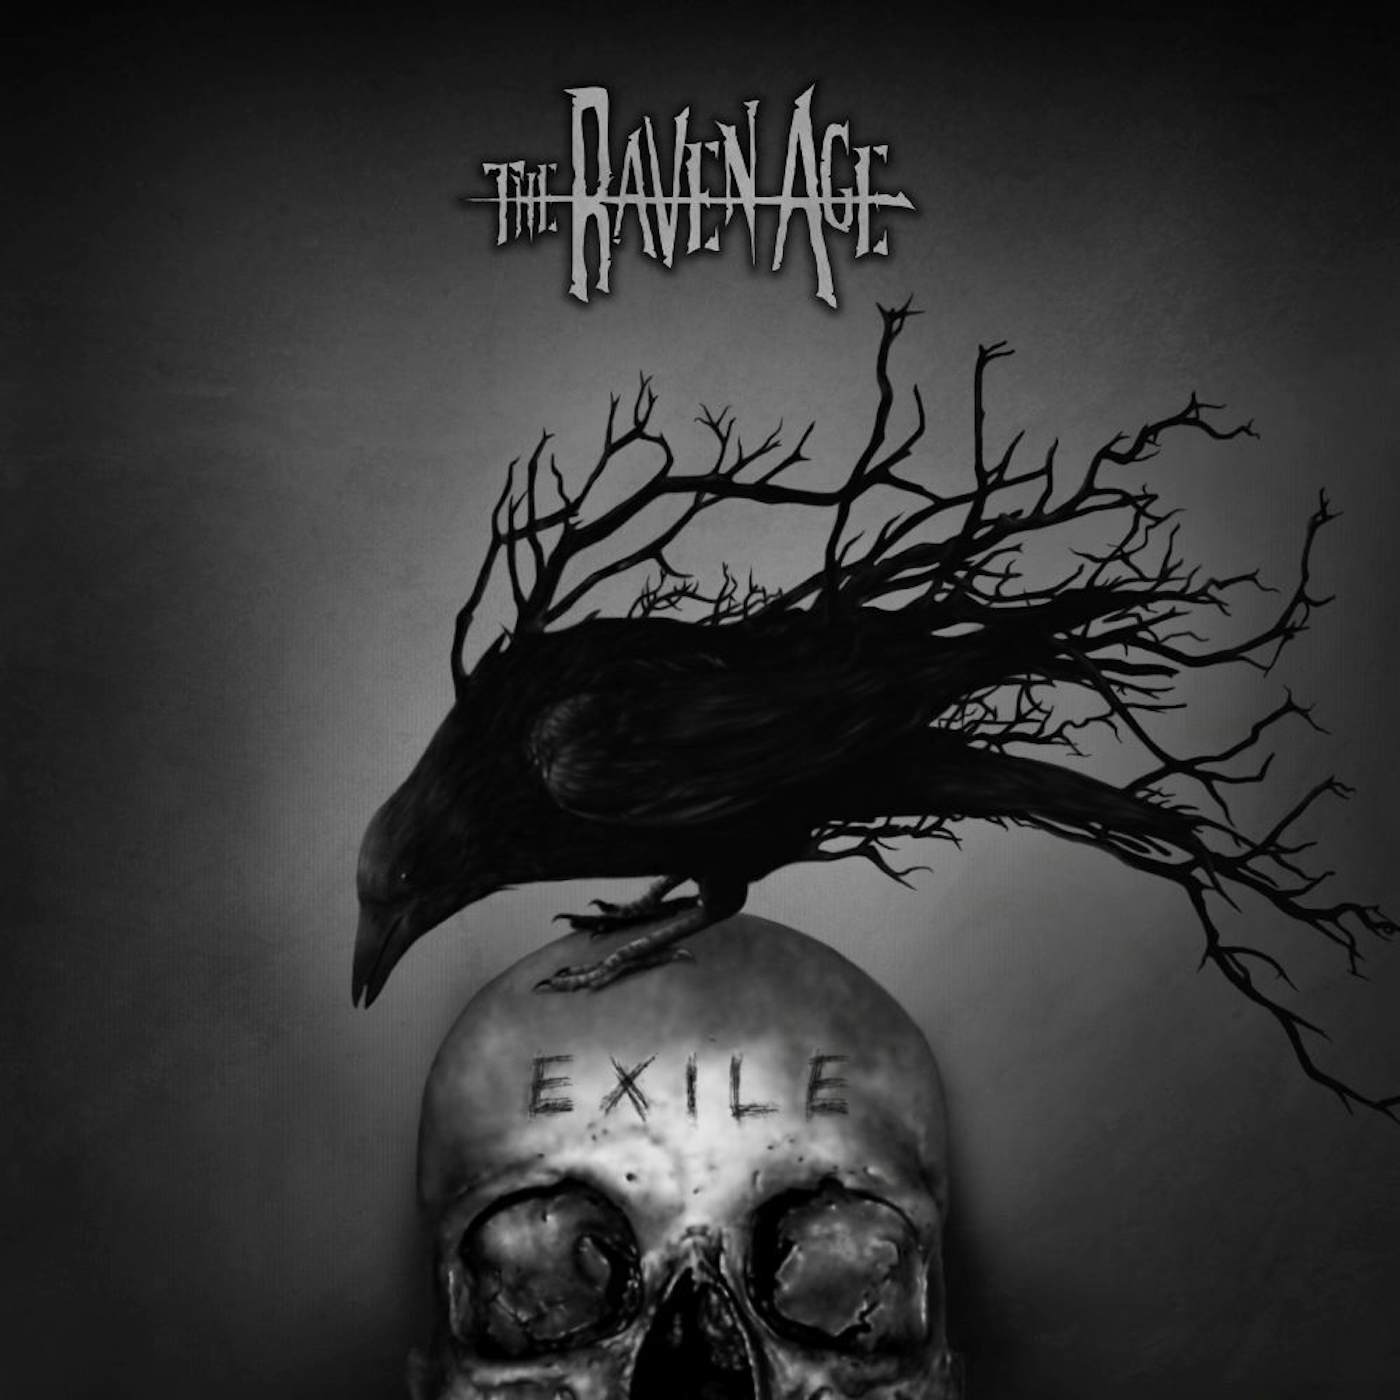 The Raven Age Exile Vinyl Record